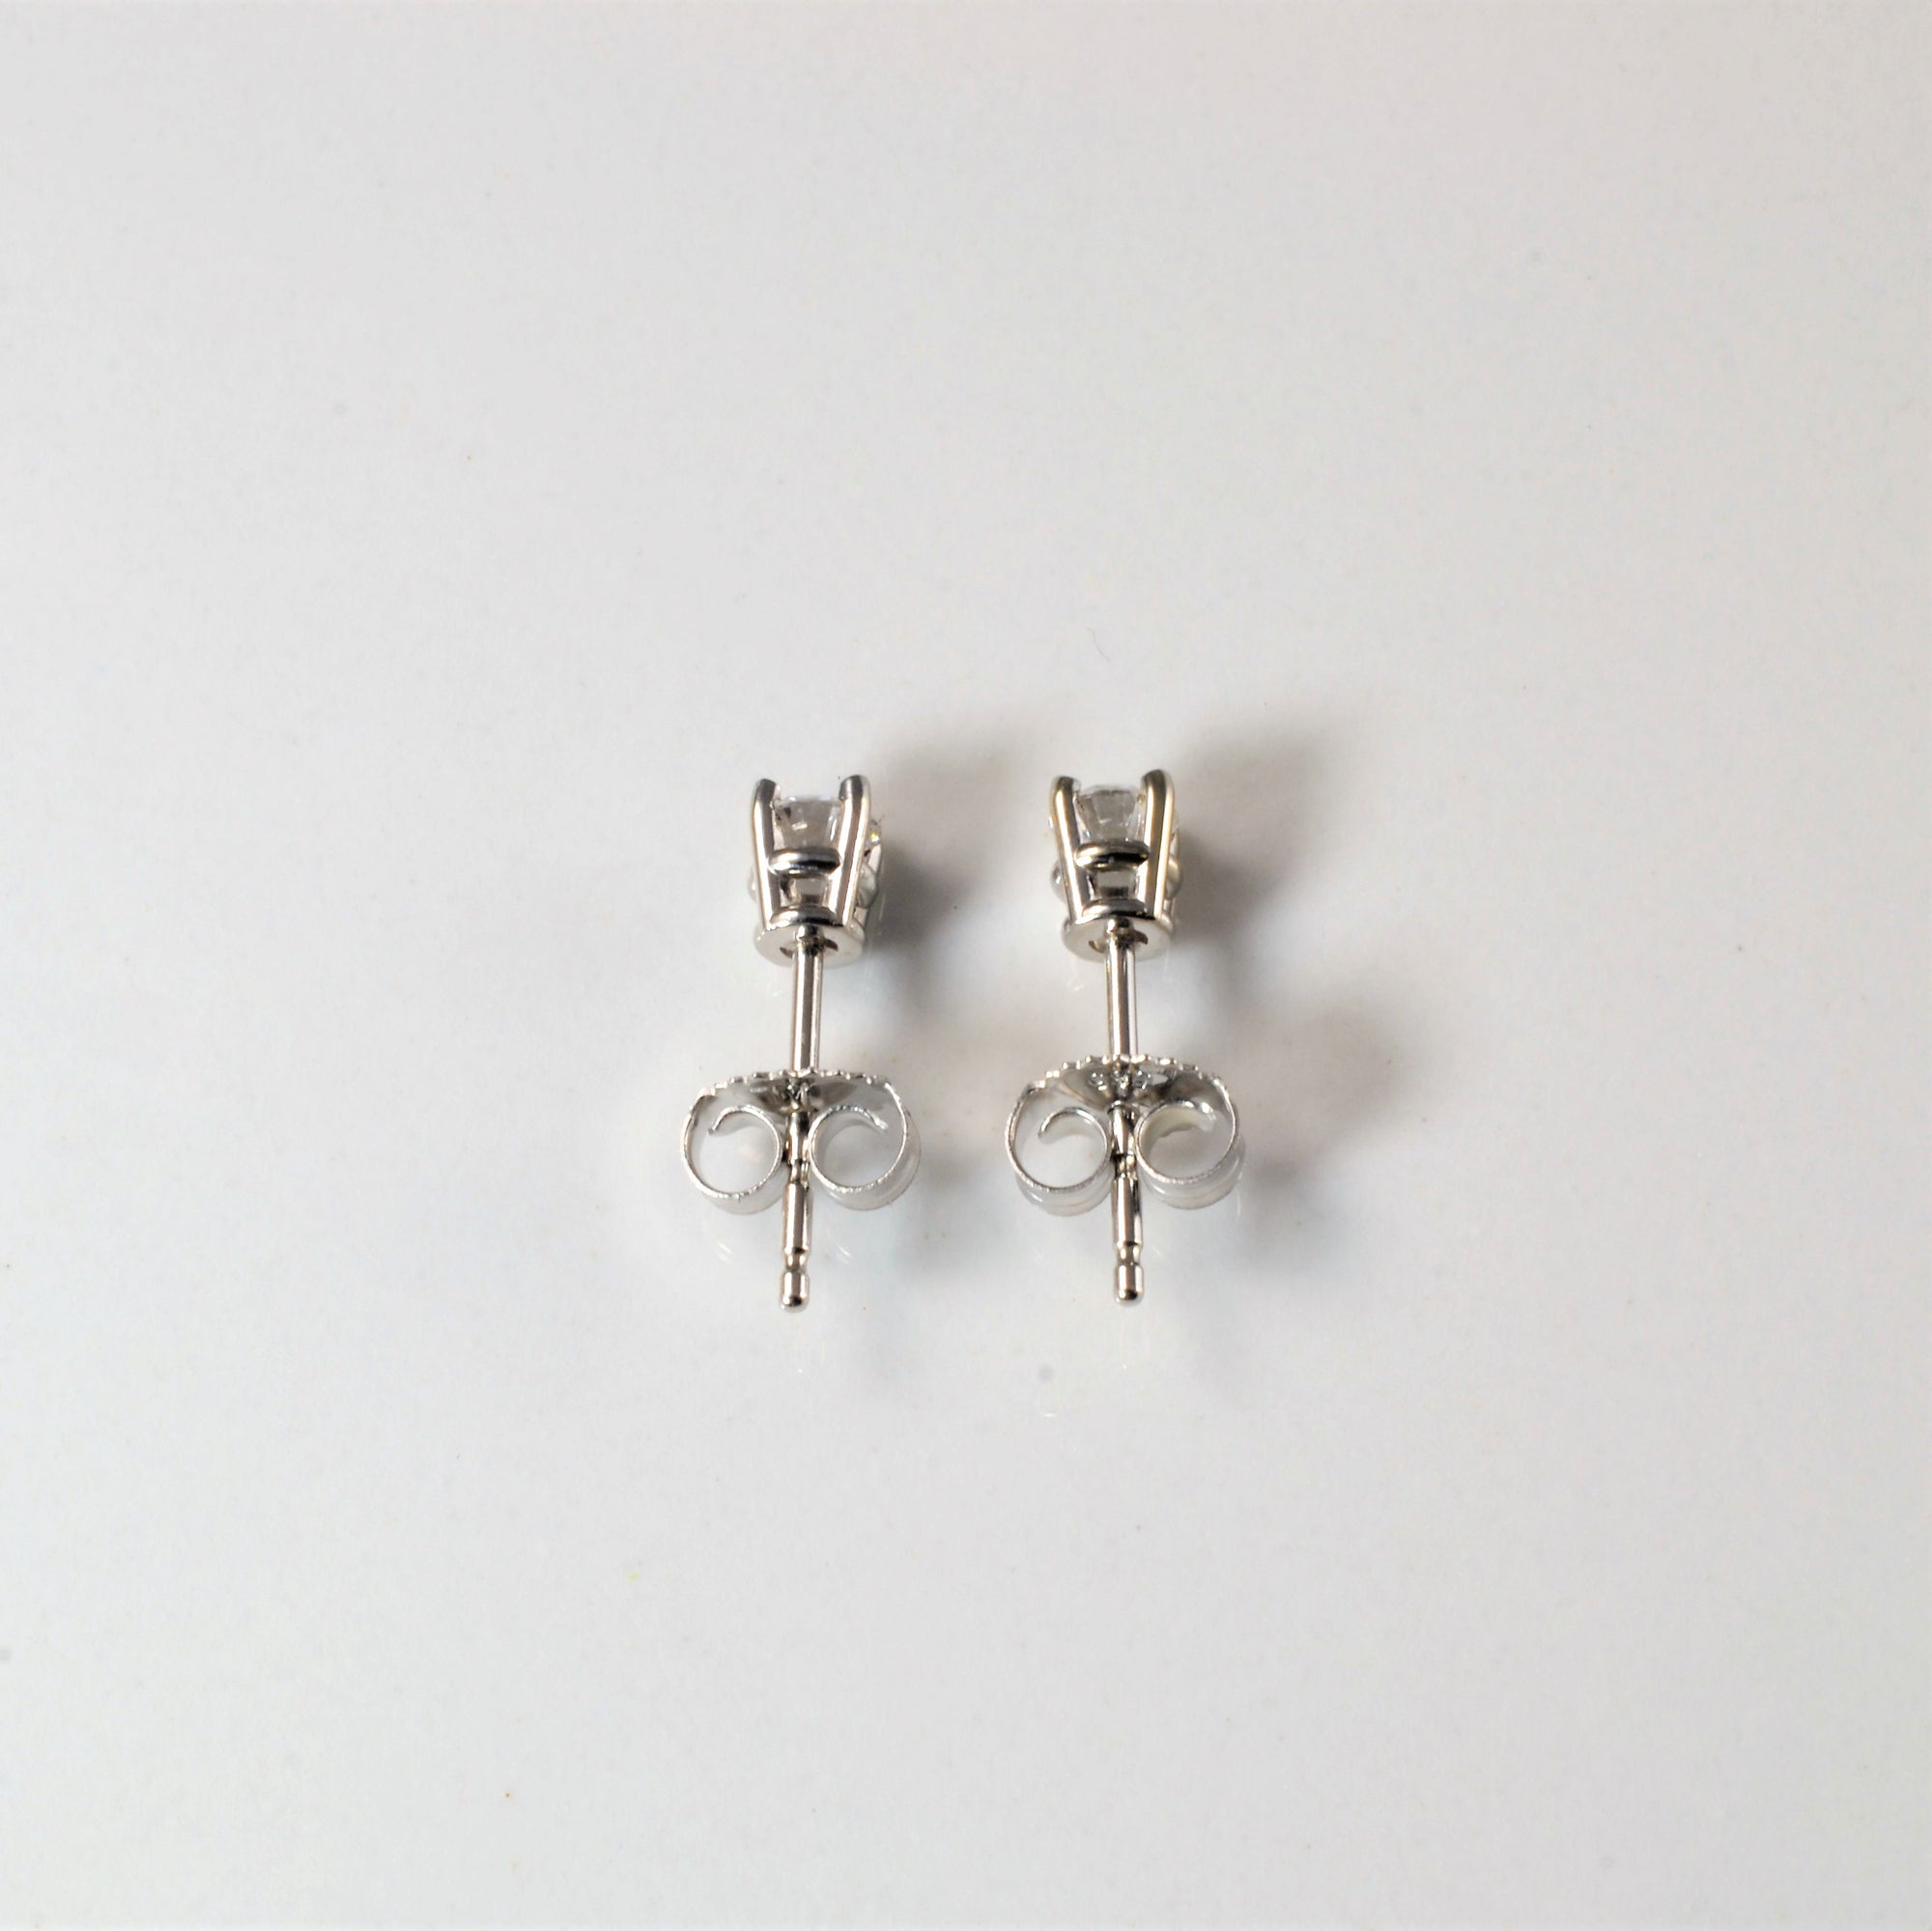 'Bespoke' Classic Solitaire Diamond Stud Earrings | White Gold | Est. 0.25ctw |